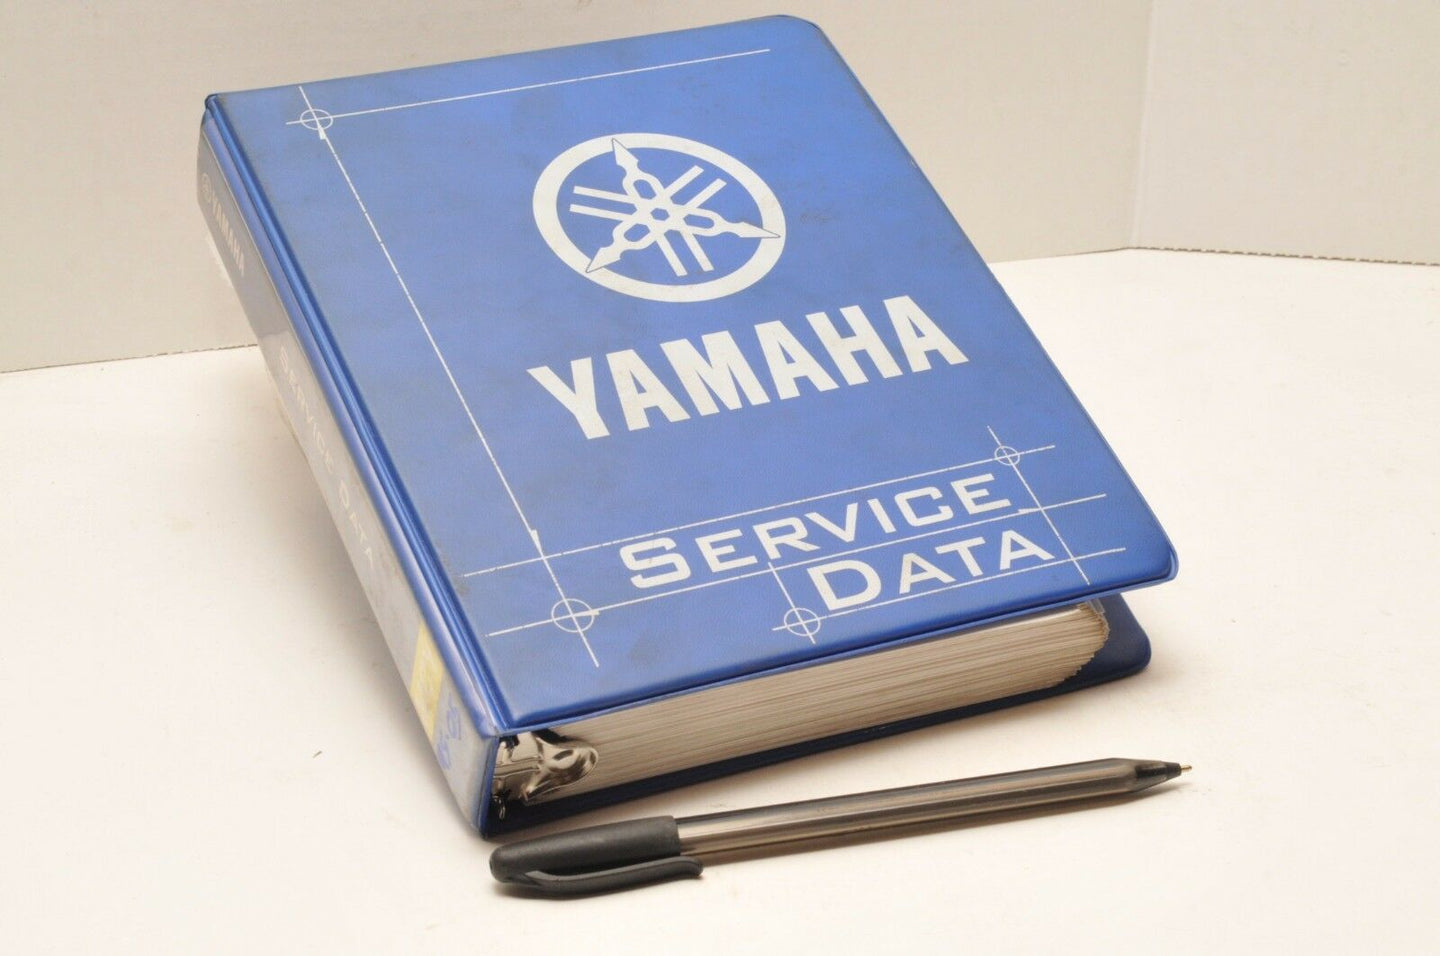 Genuine YAMAHA SERVICE DATA BOOKLET 1995-2005 MOTORCYCLE SCOOTER LIT-SDATA-MC-00